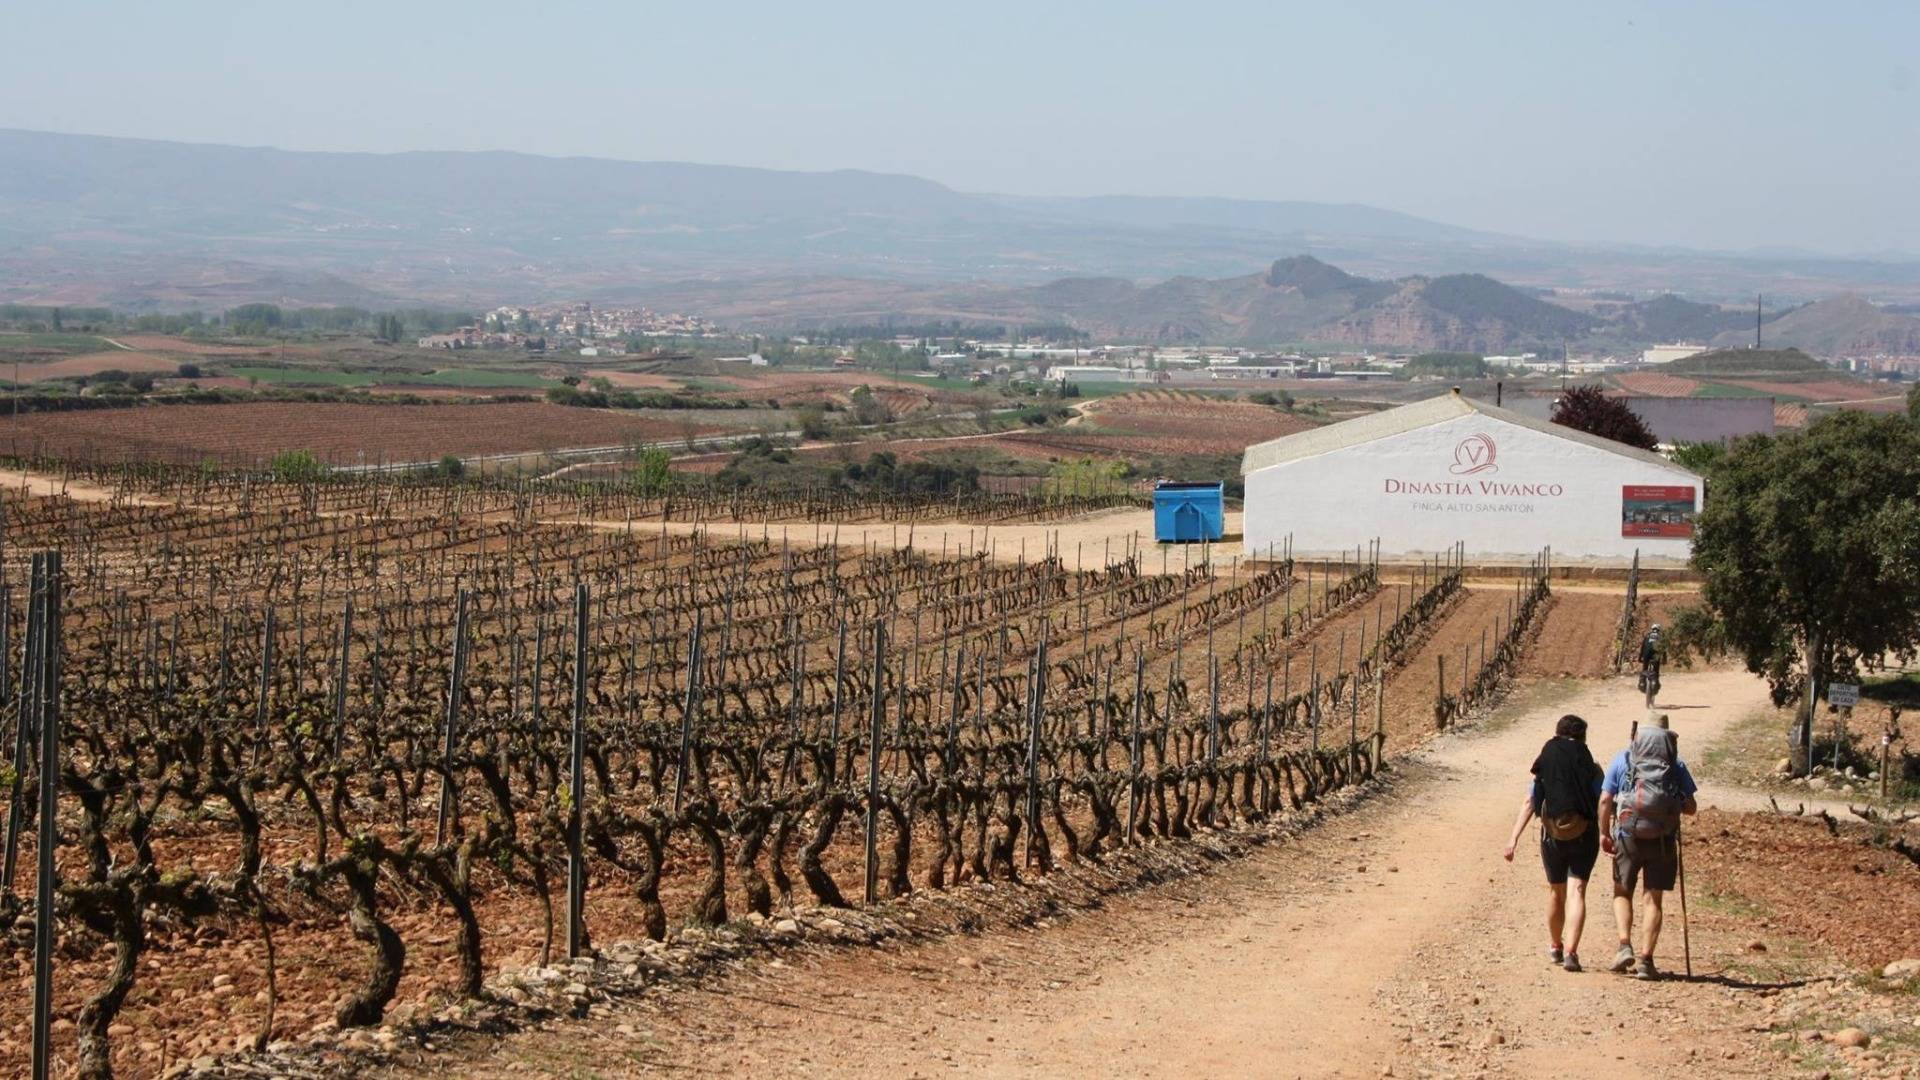 It’s no secret that Spain has plenty of vineyards